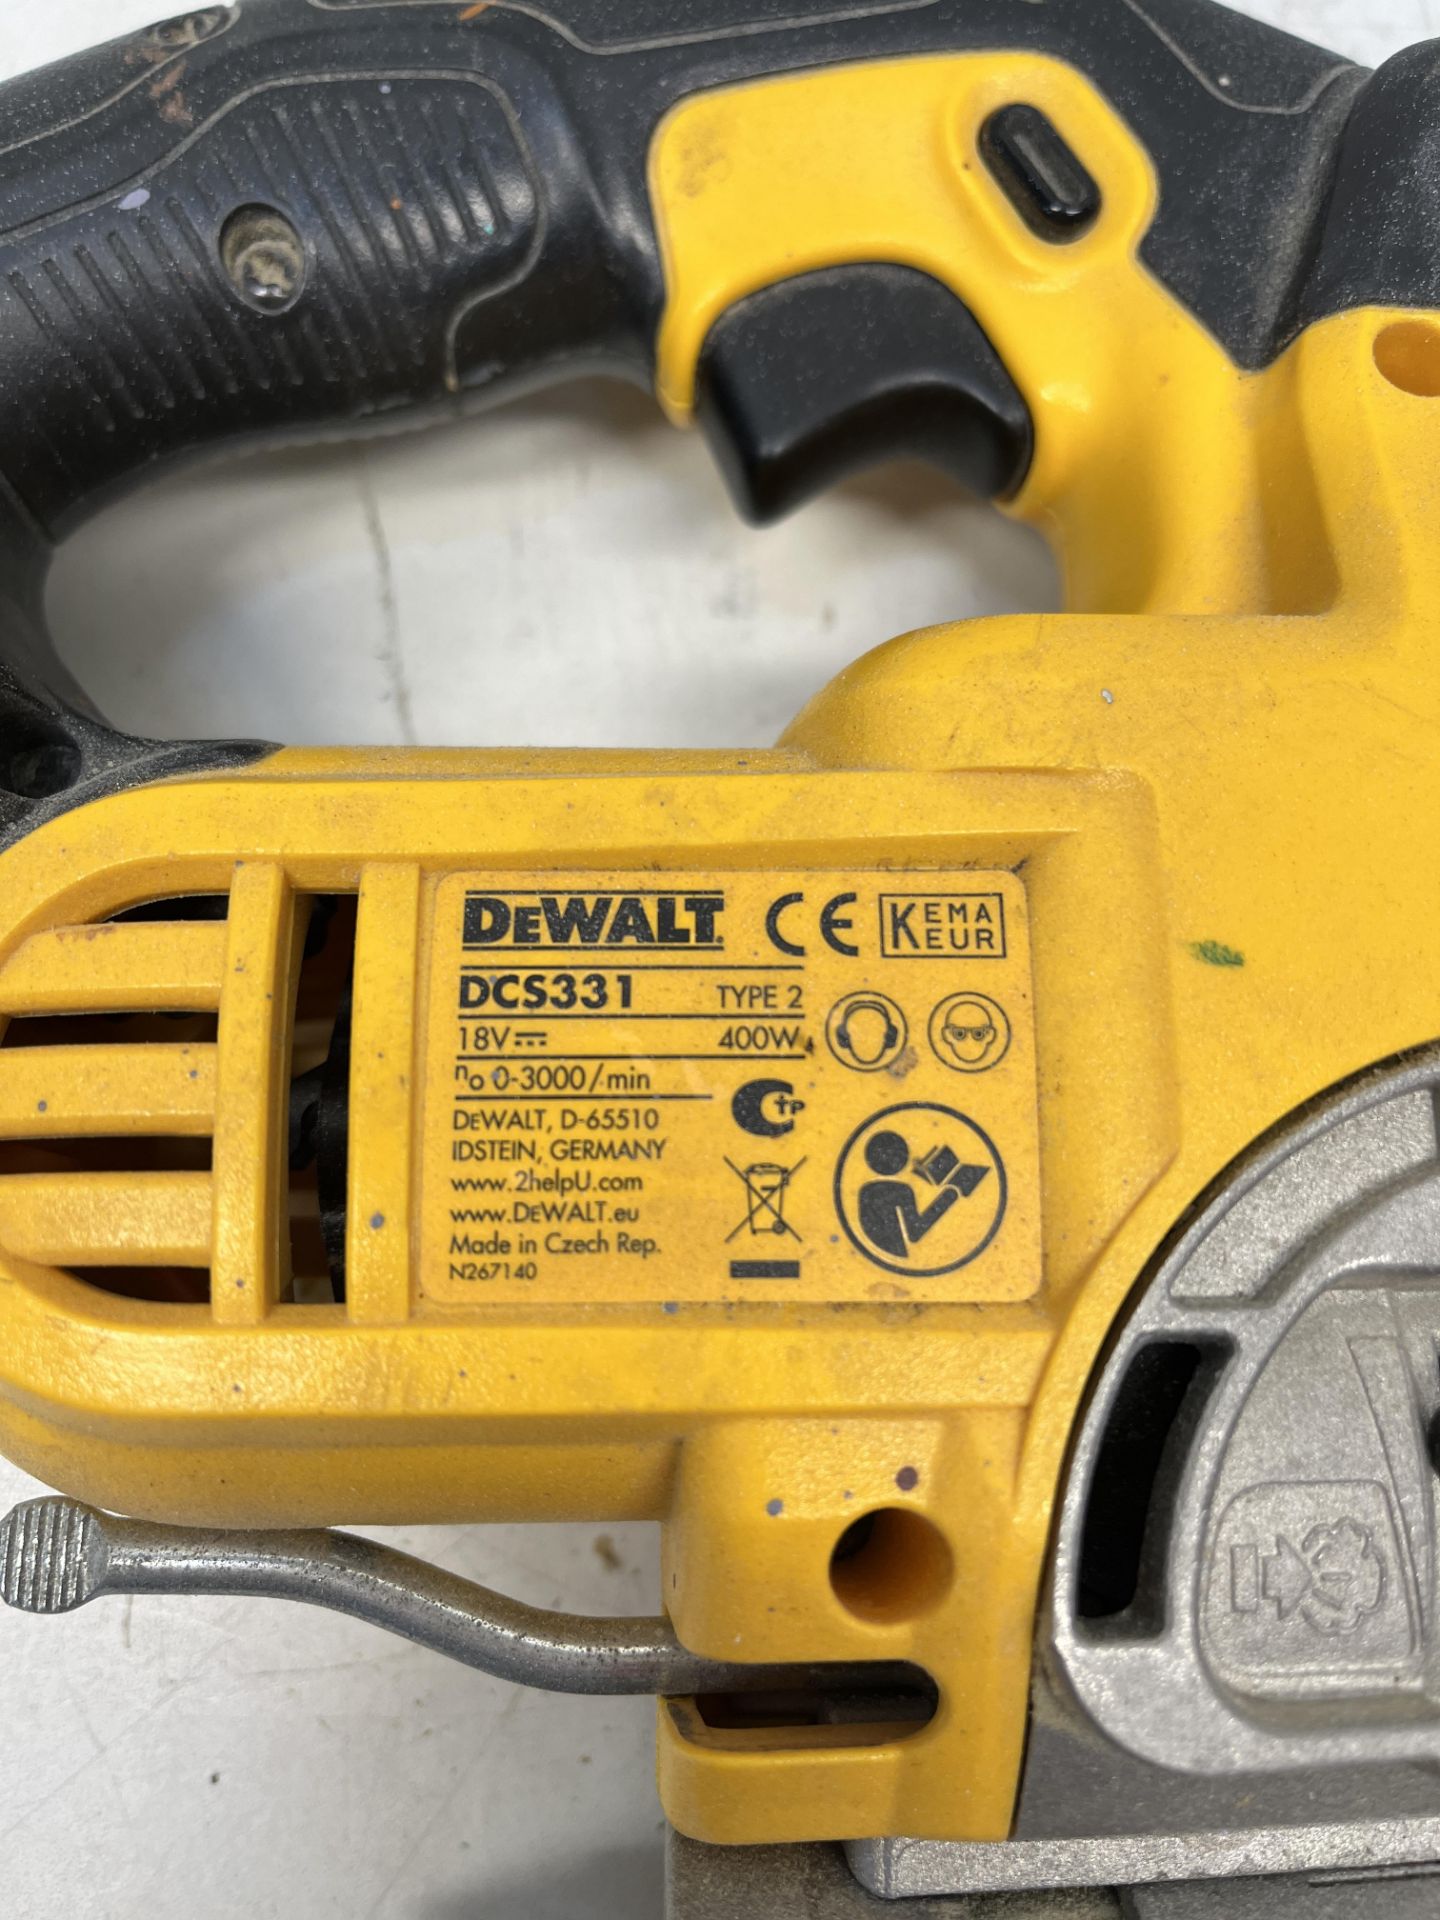 DeWalt DCS332 cordless jigsaw - Image 2 of 2